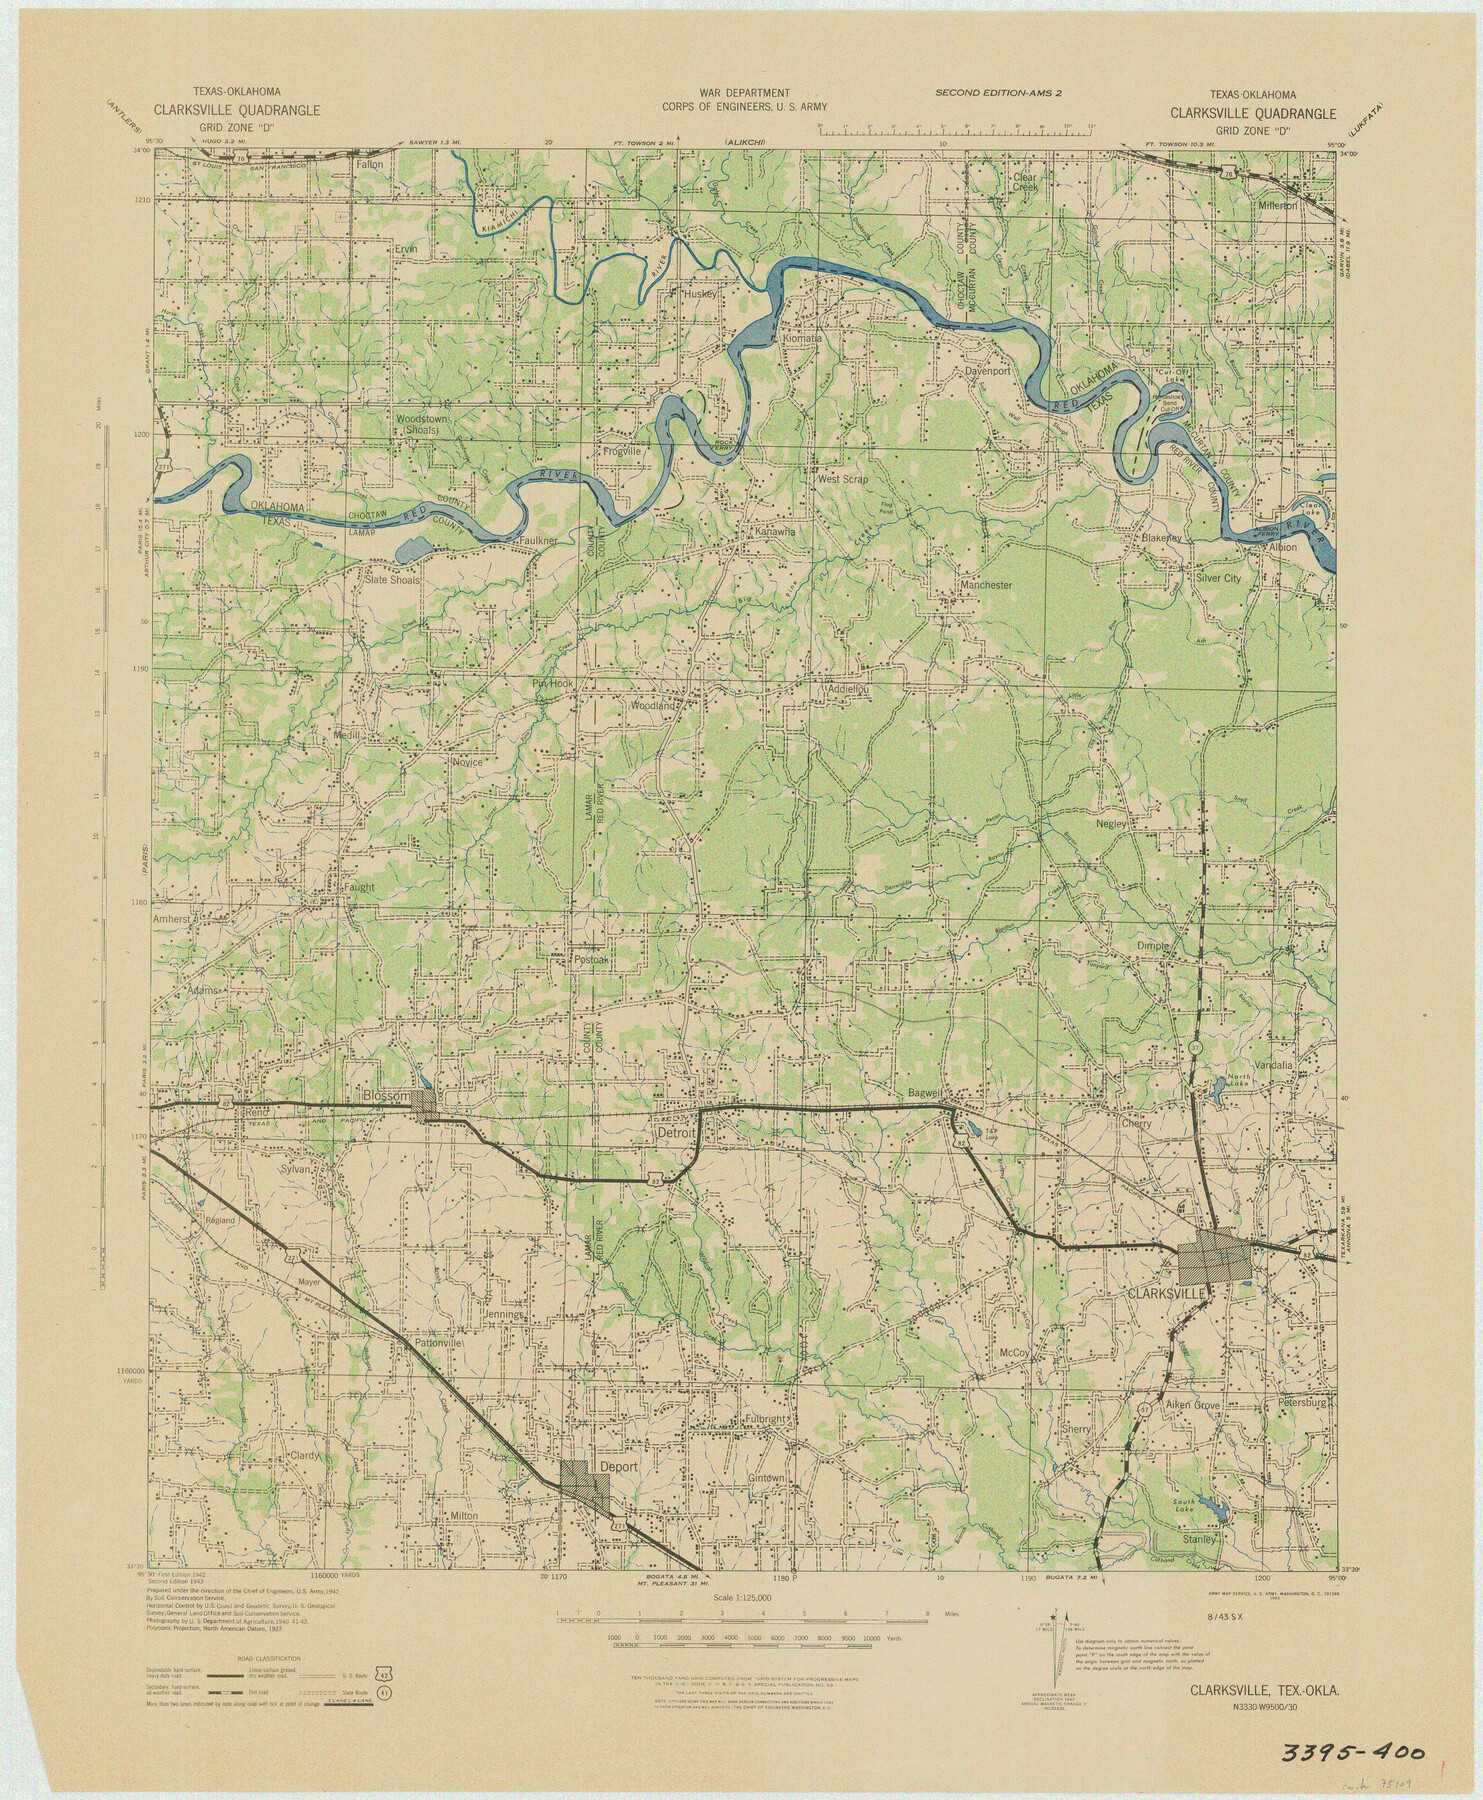 75109, Texas-Oklahoma Clarksville Quadrangle, General Map Collection